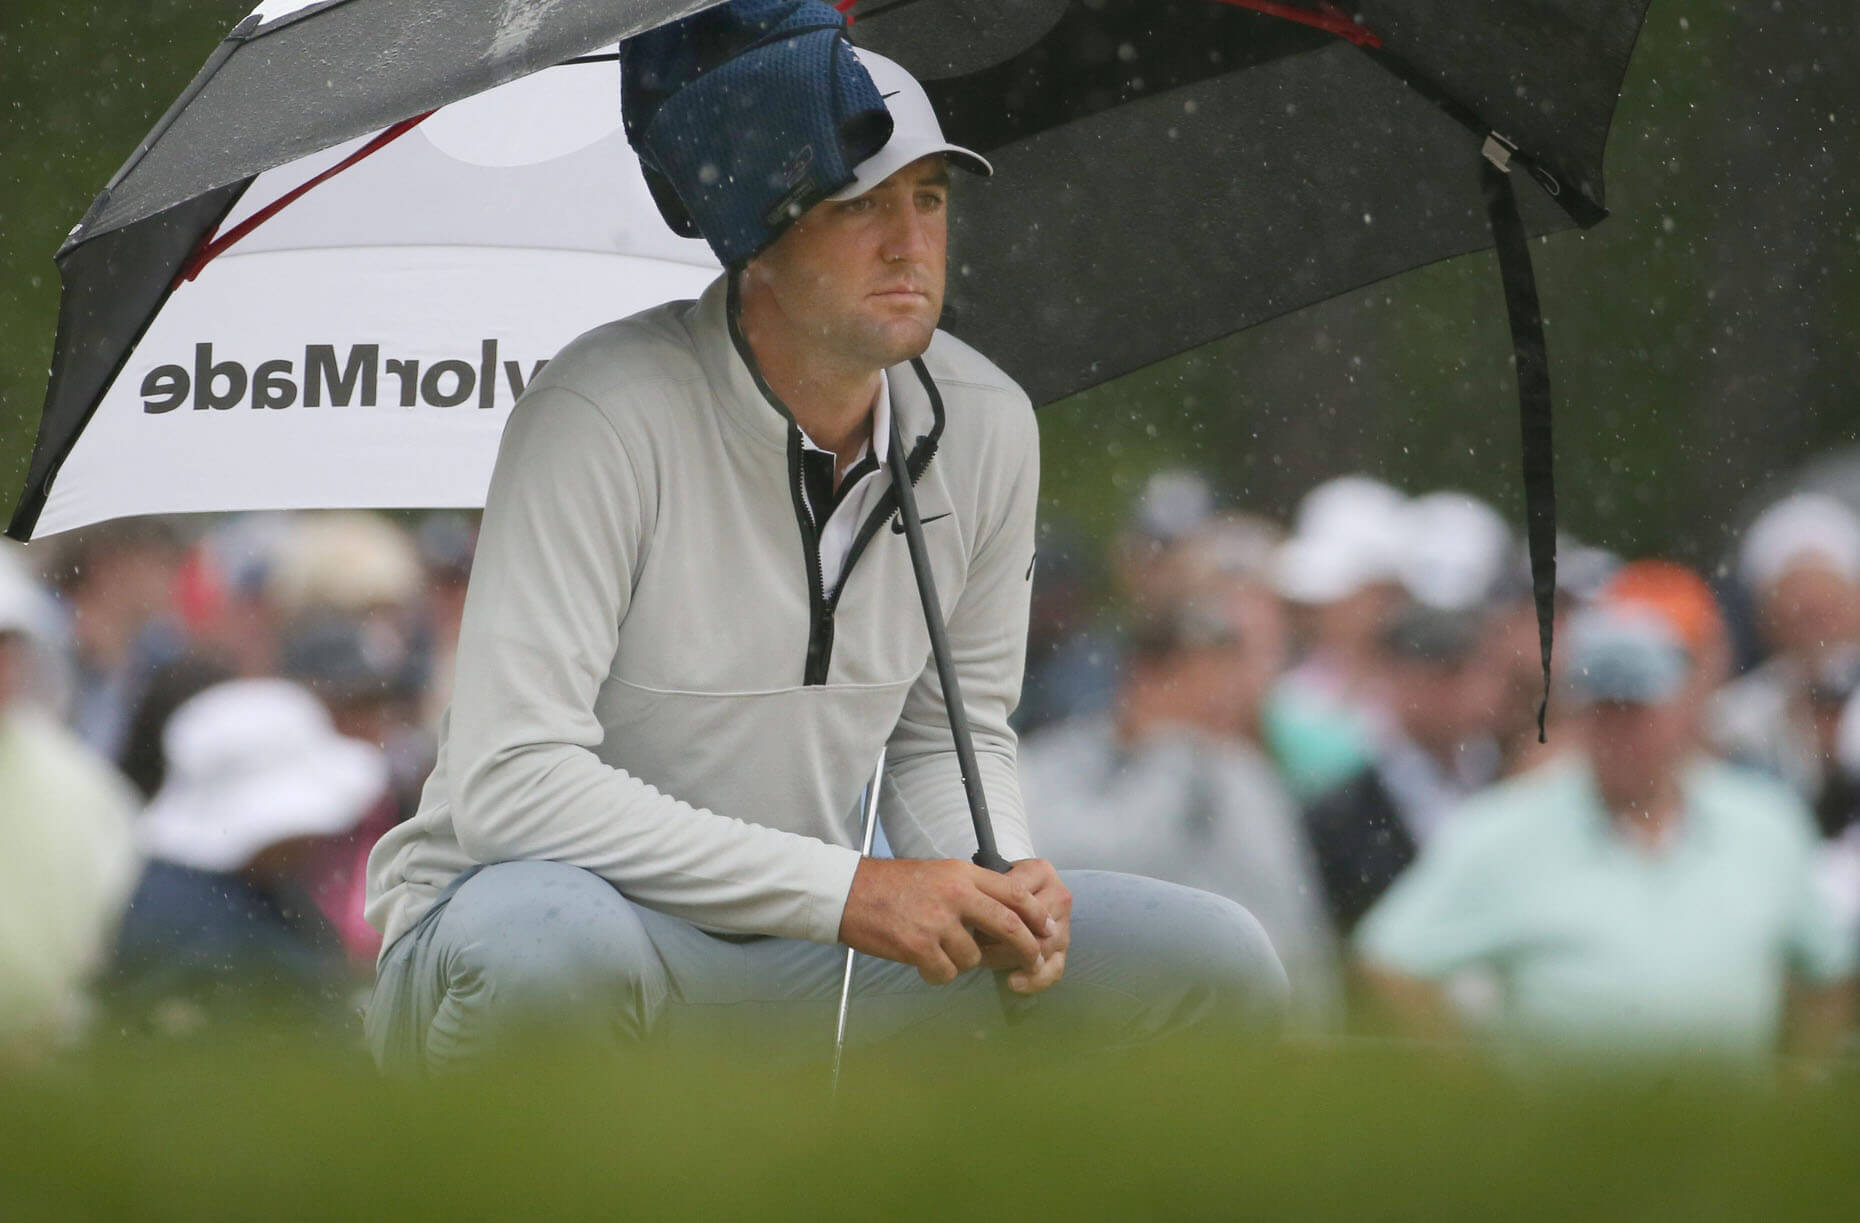 PGA Championship Weather: Rain for Round 2